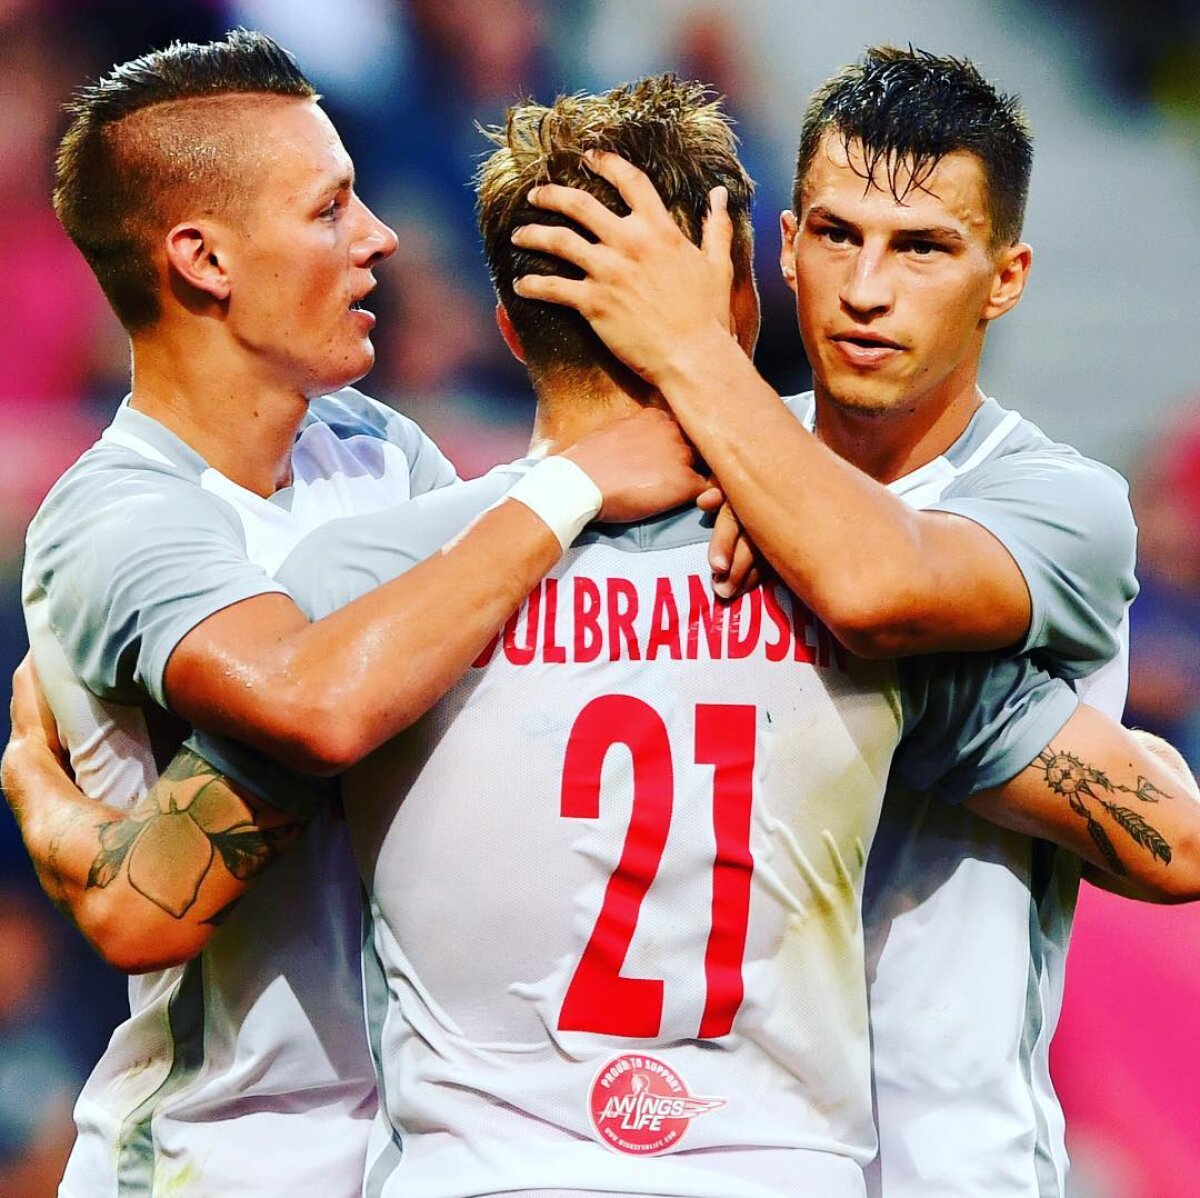 FOTO+VIDEO » RB Salzburg - Viitorul 4-0 » Campioana, OUT din Europa!